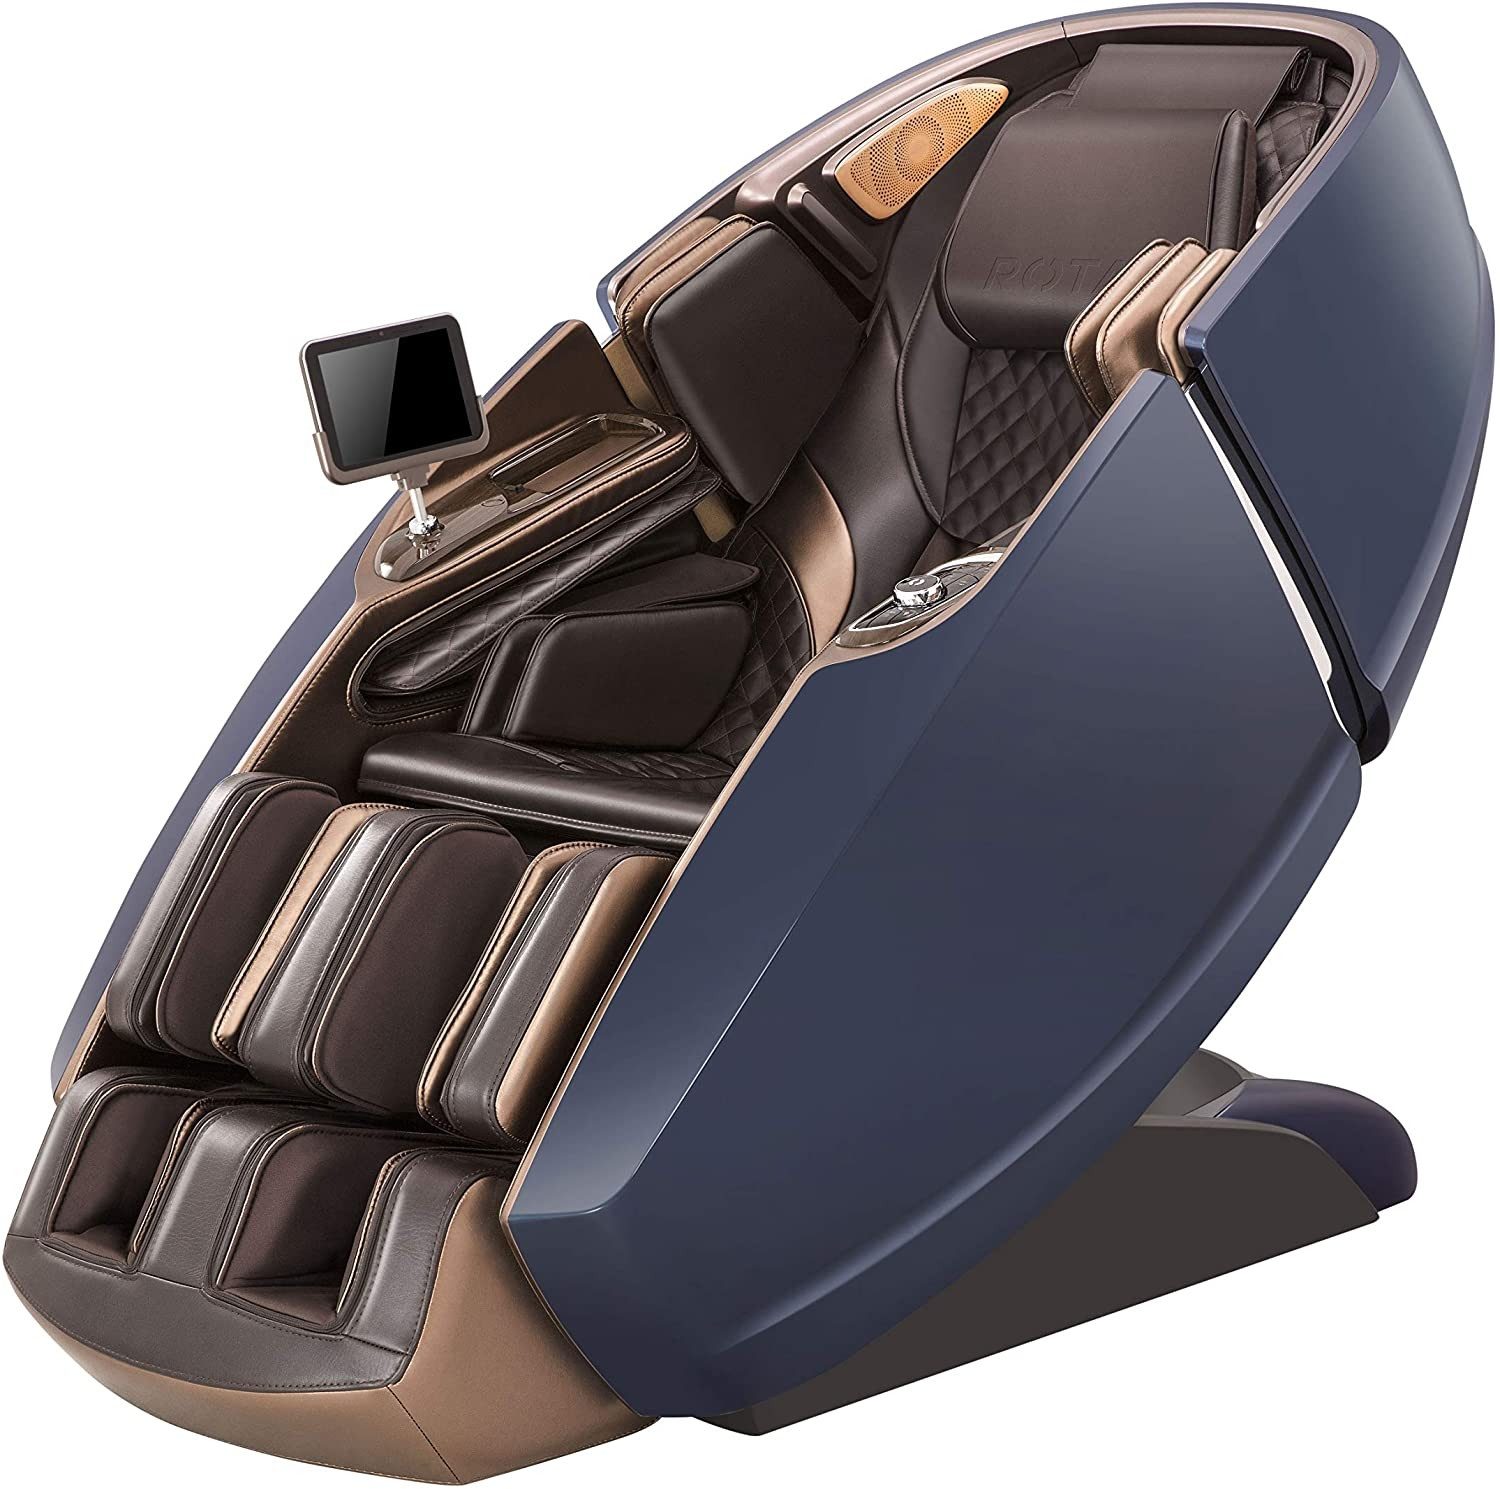 NAIPO Massagesessel 3D mit Aufbauservice, High-End Massagestuhl mit Tablet